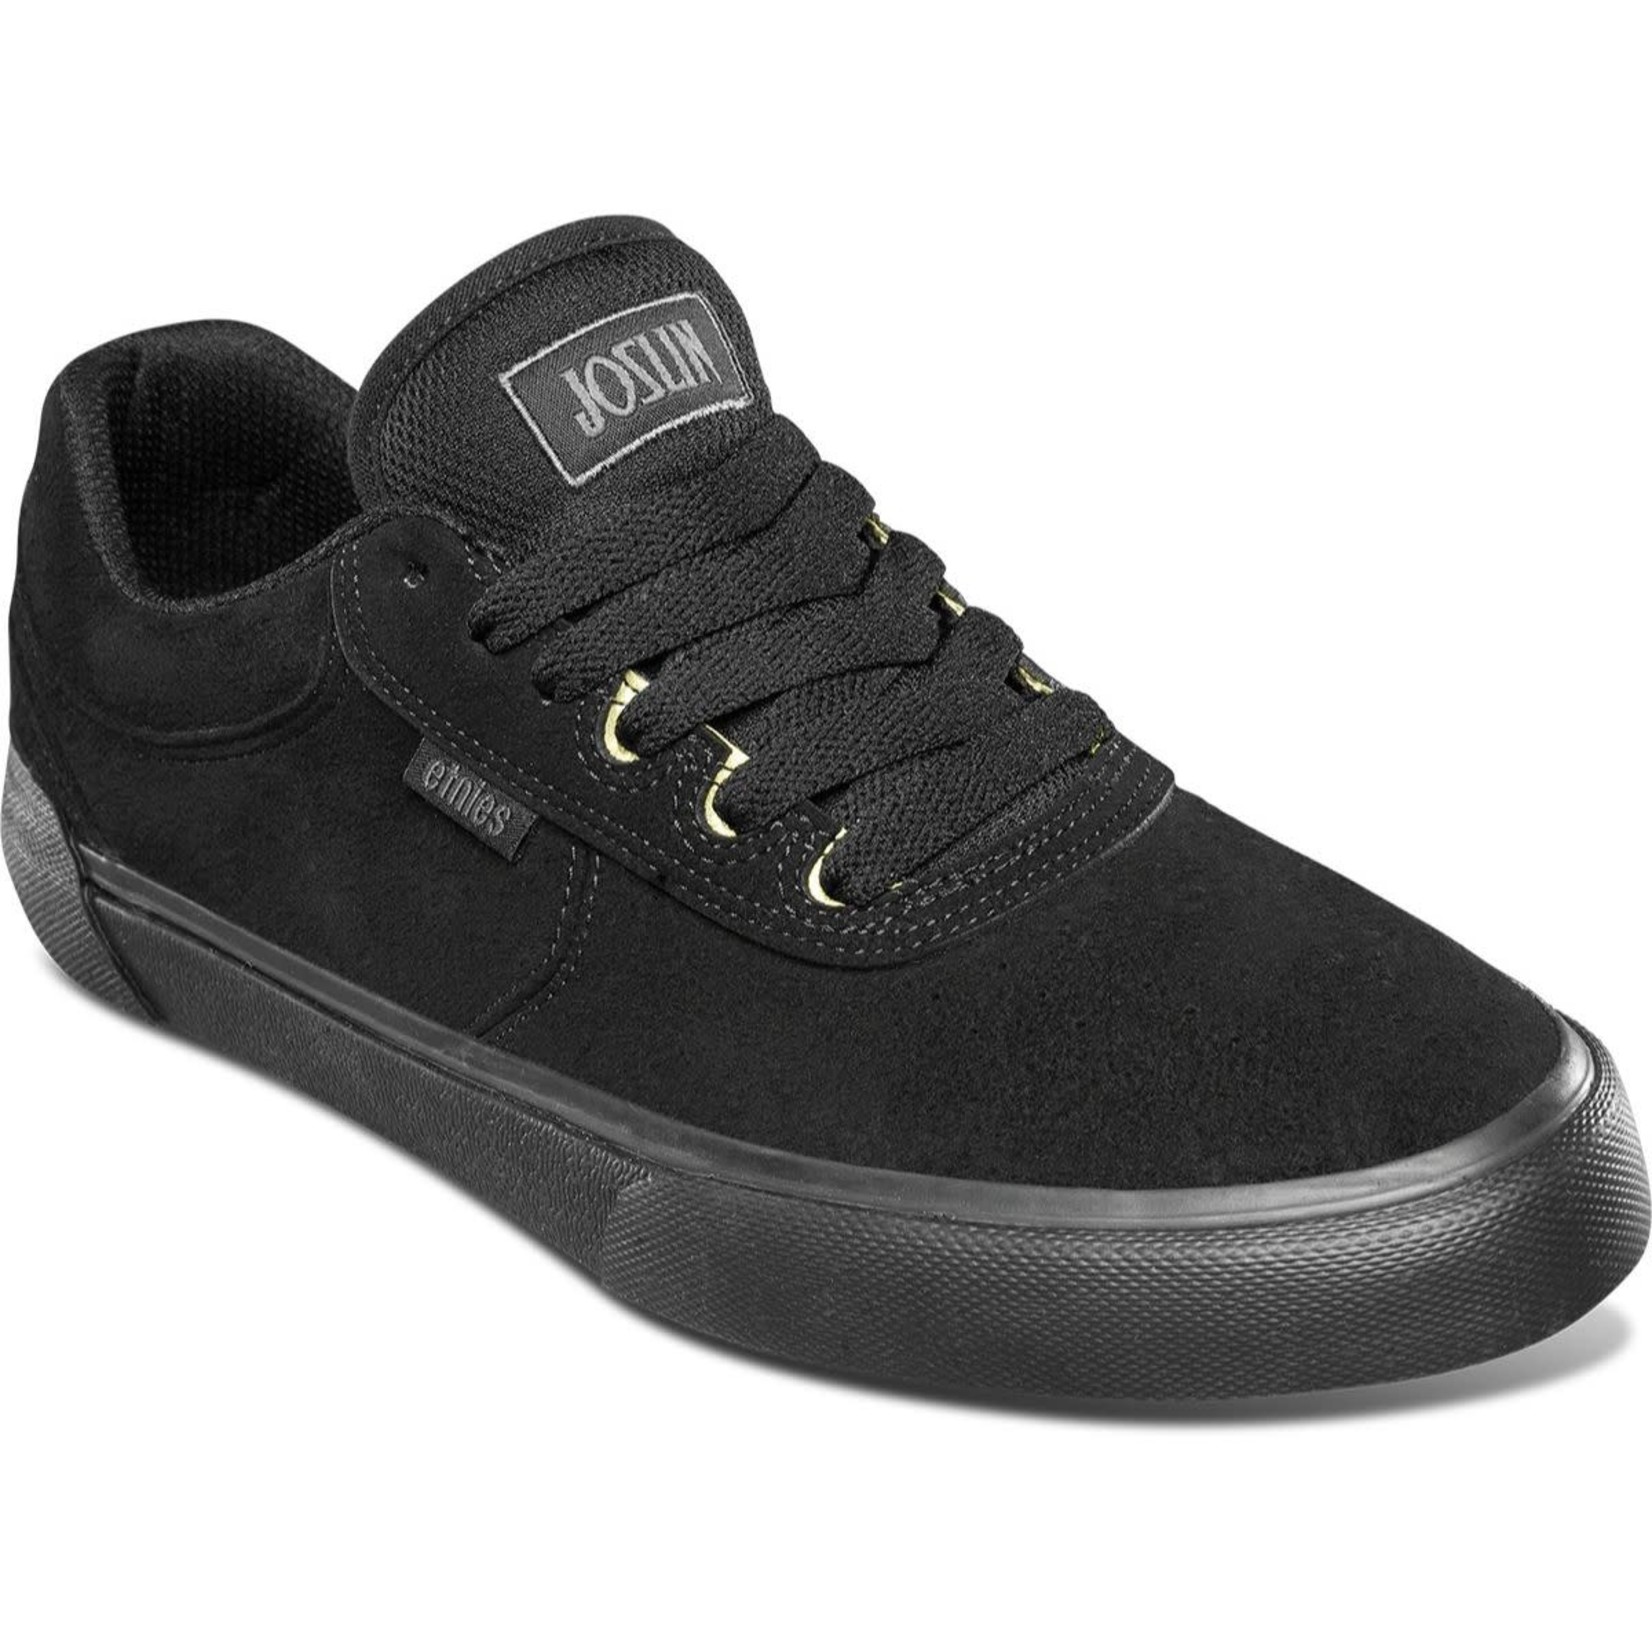 Etnies Etnies Joslin Vulc Skate Shoe - Black/Black